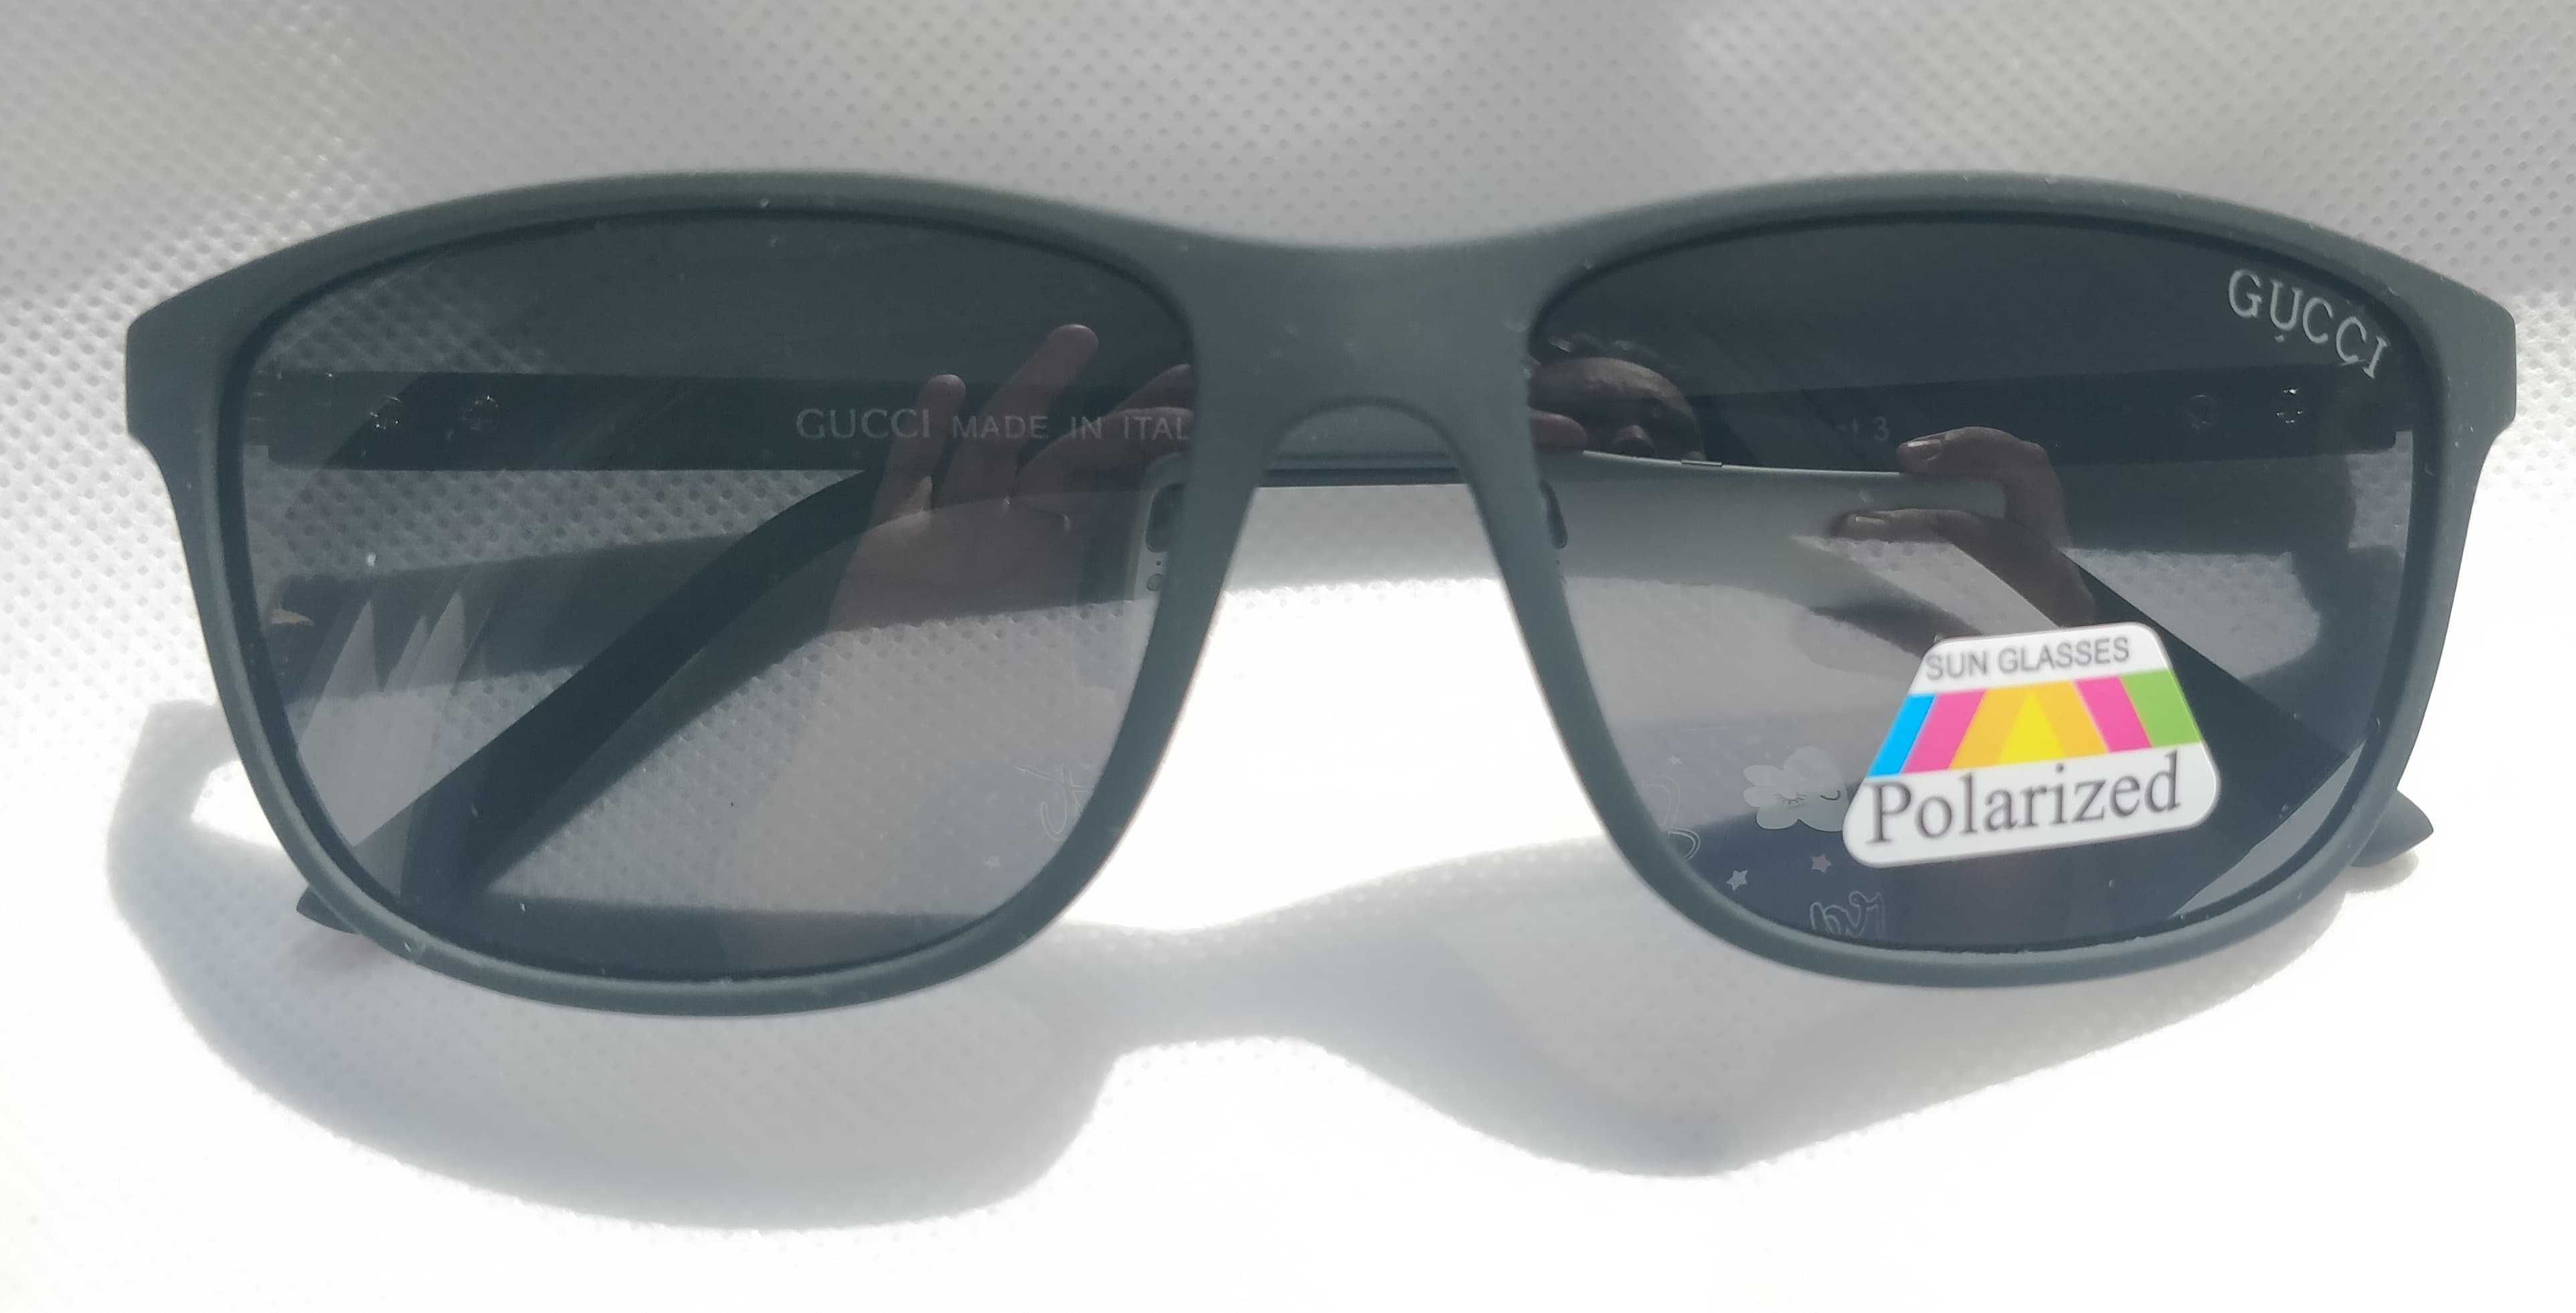 Ochelari de soare Gucci model 2, polarizat